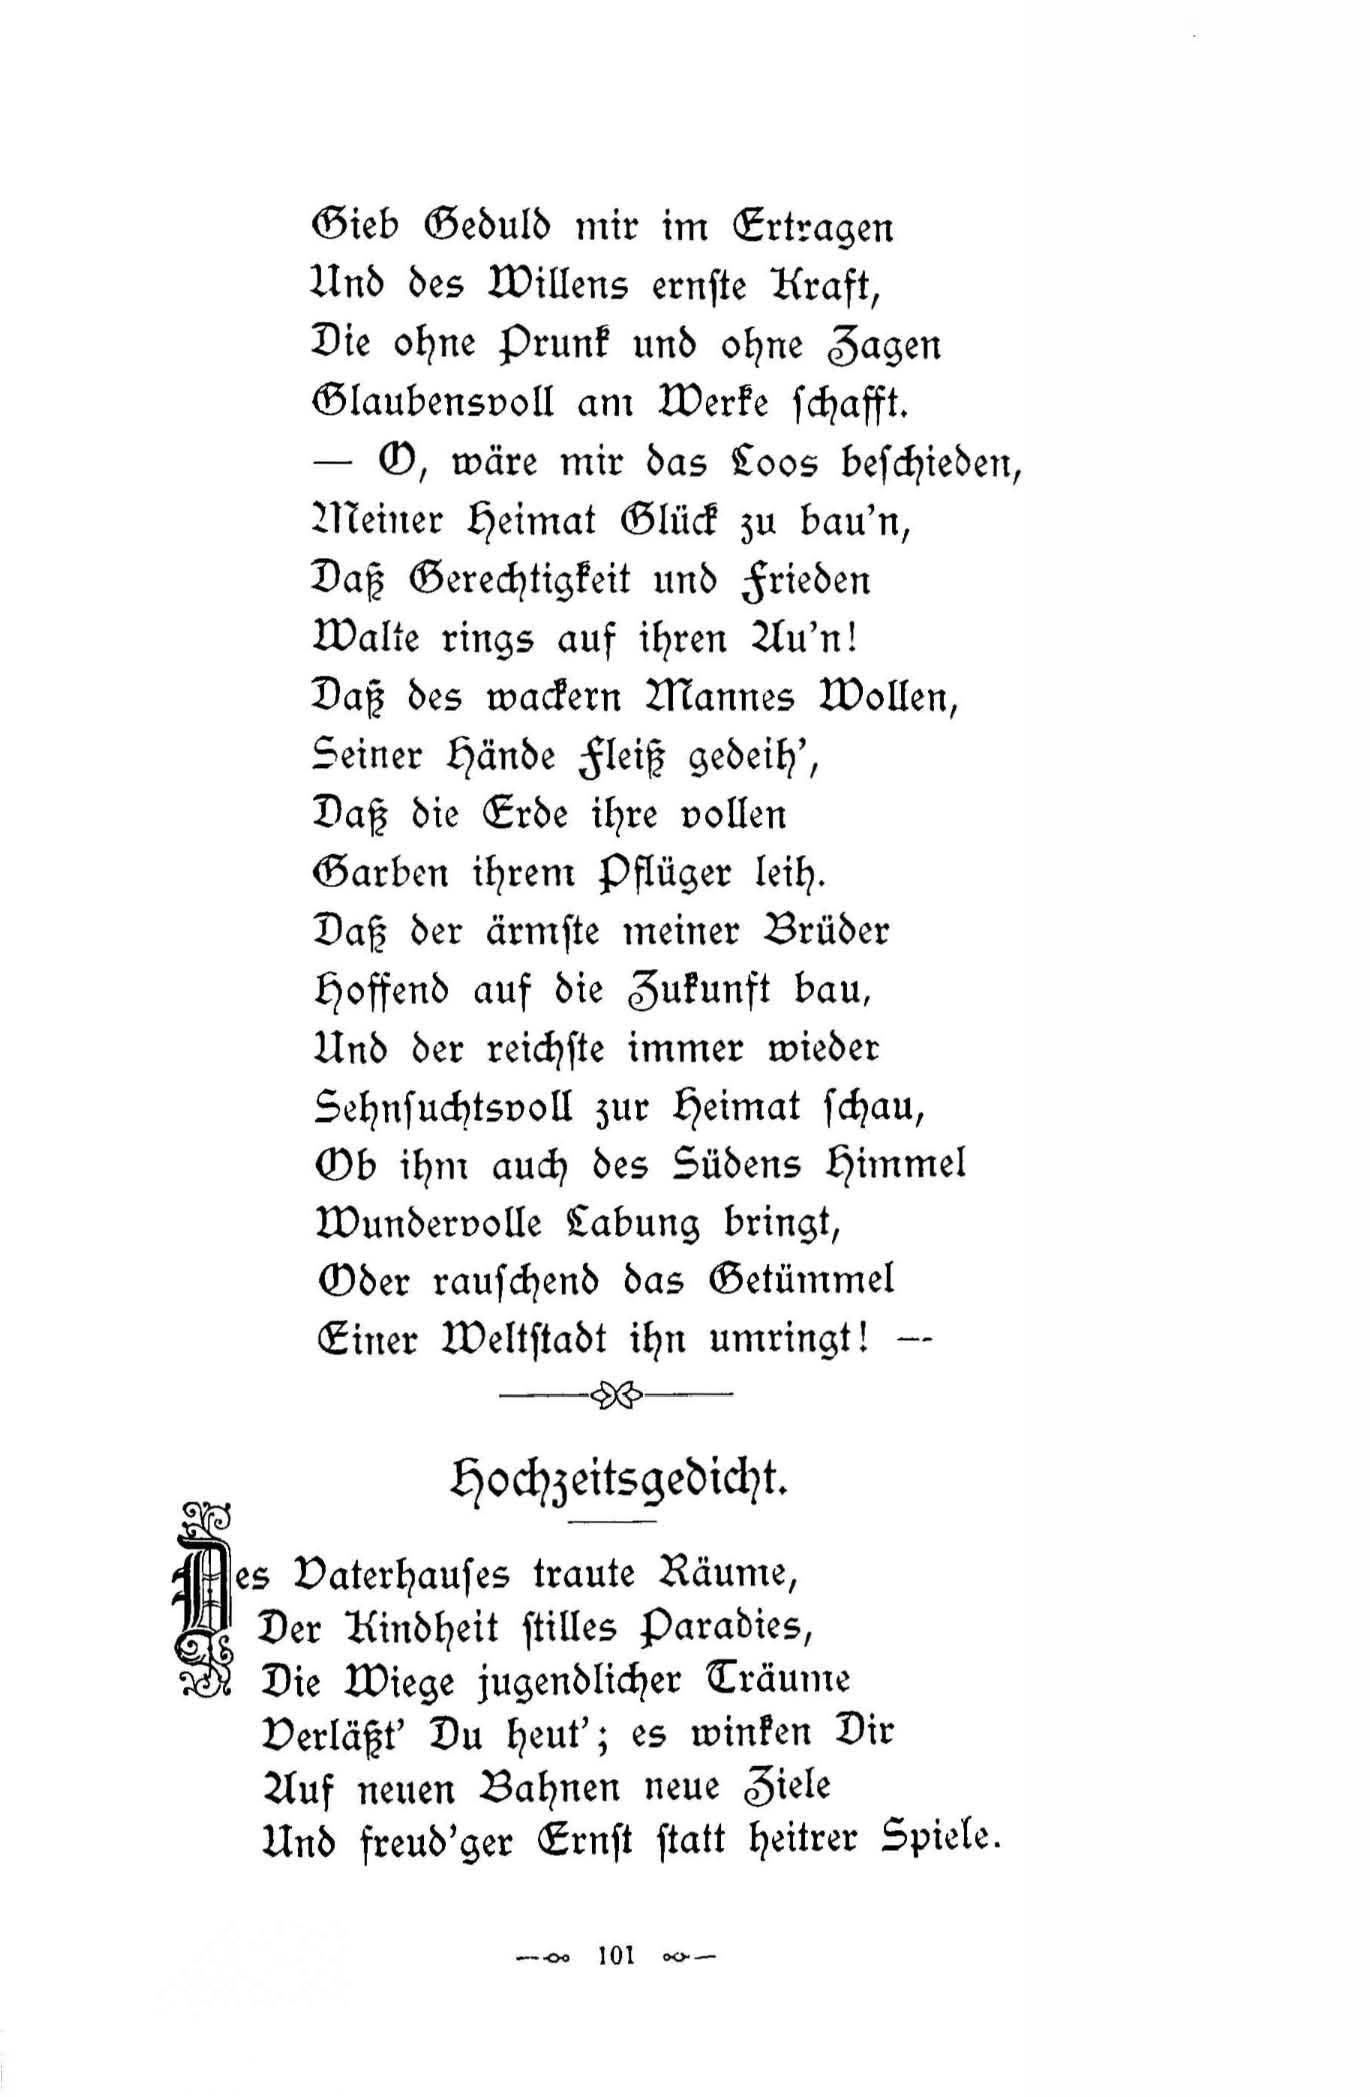 Hochzeitsgedicht (1896) | 1. (101) Основной текст